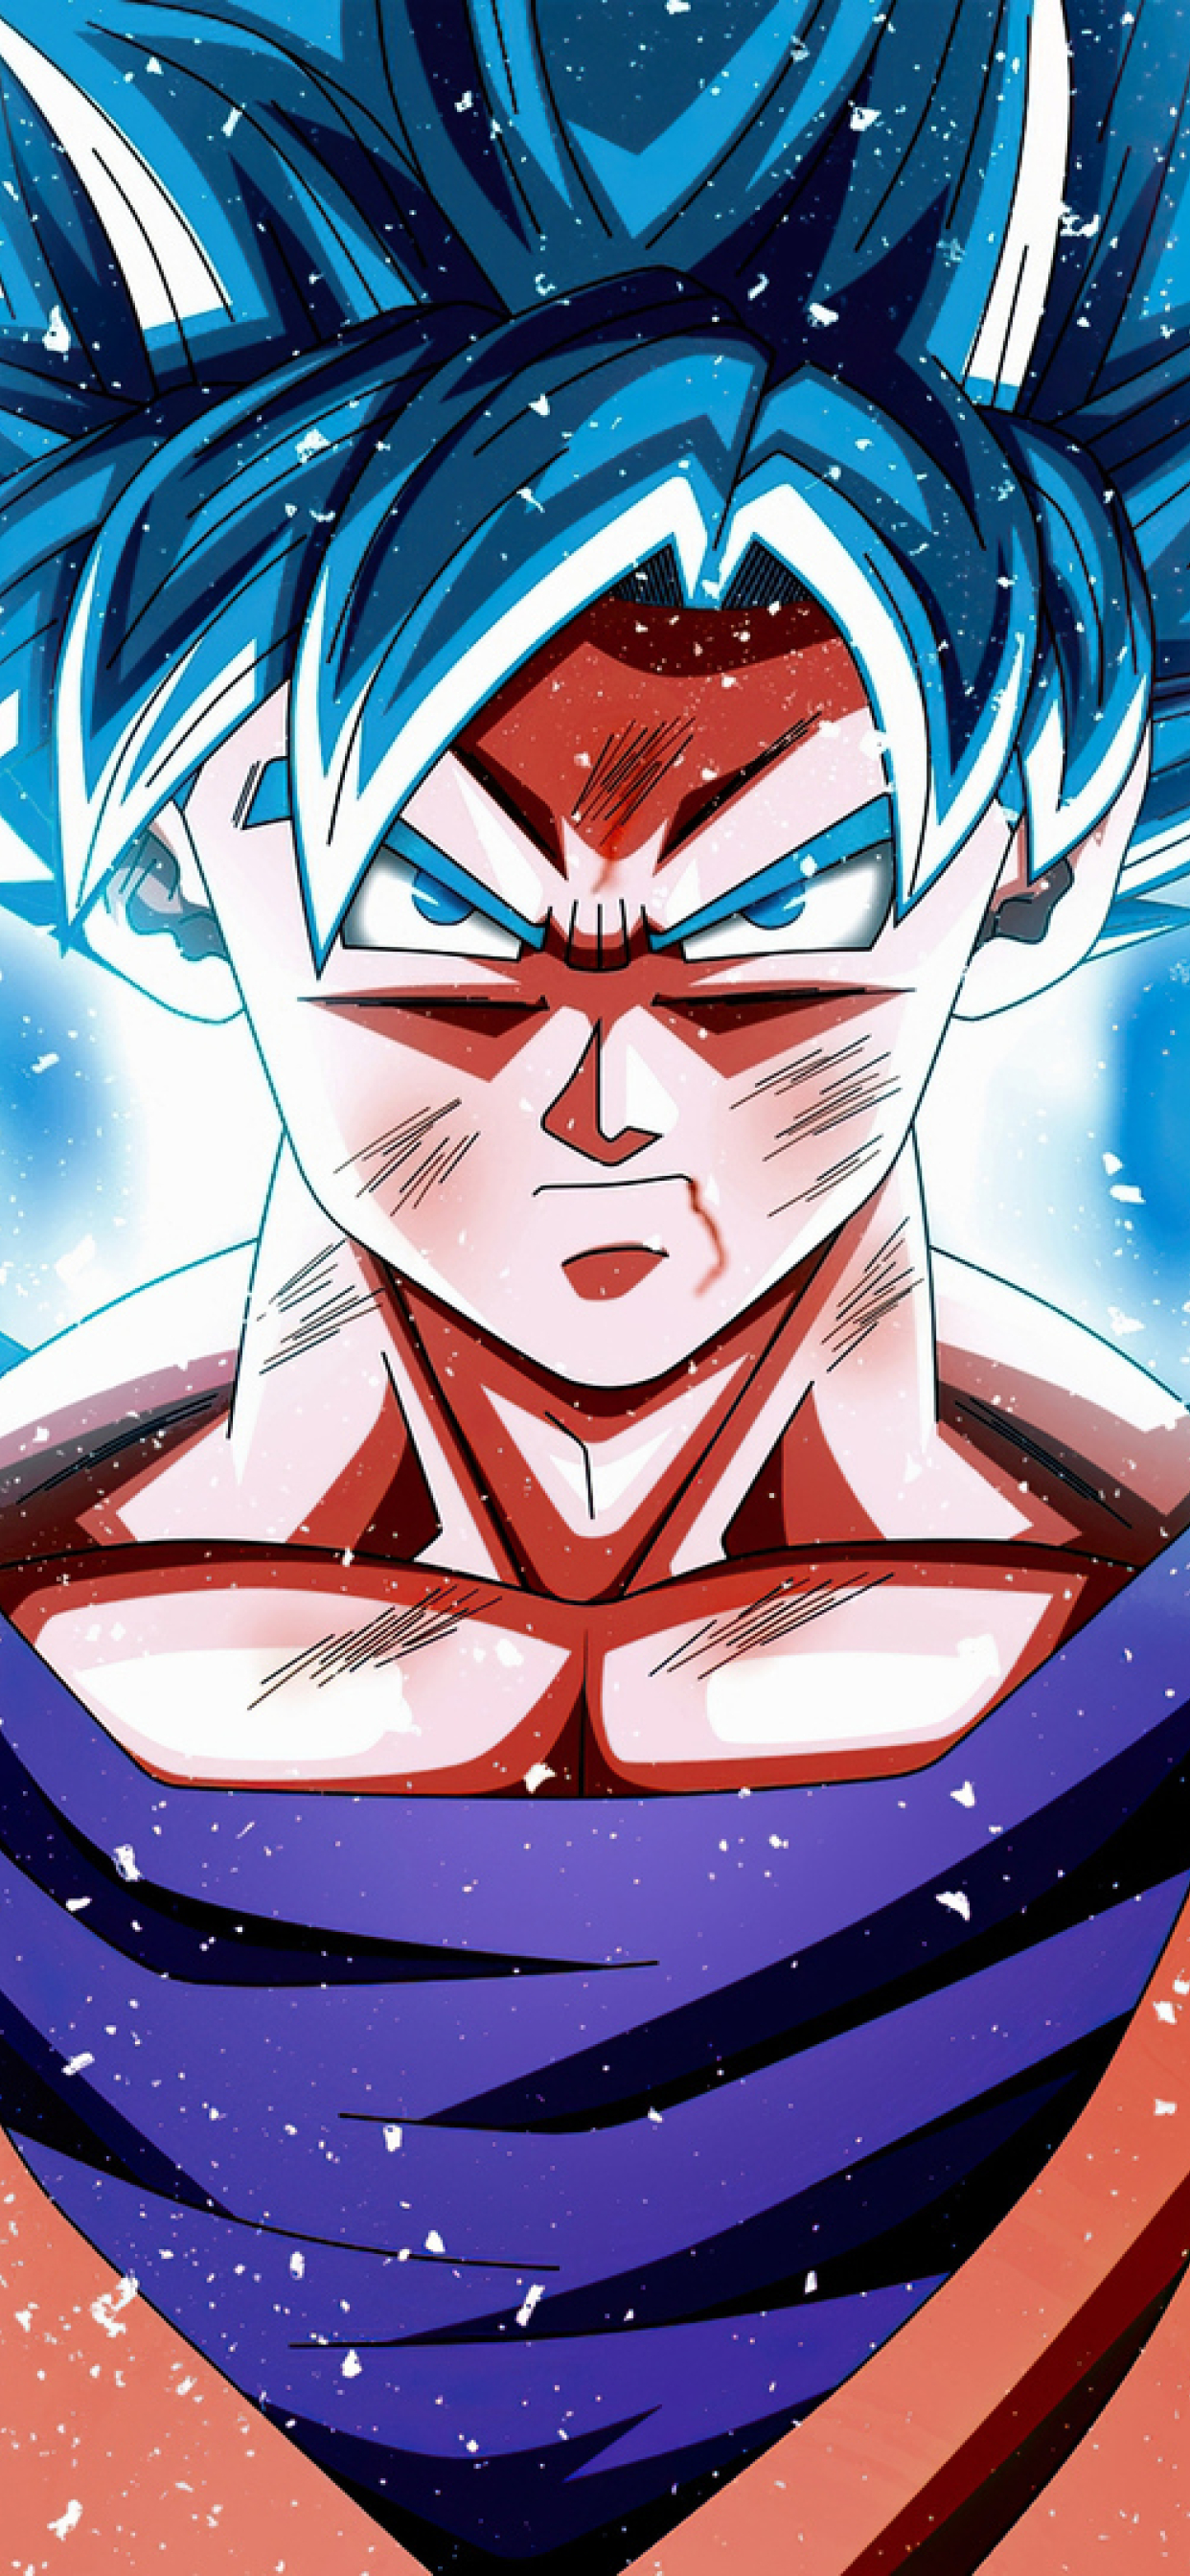 𝑮𝒐𝒌𝒖 𝒚 𝑽𝒆𝒈𝒆𝒕𝒂 𝑺𝒔𝒋 𝒃𝒍𝒖𝒆  Wallpaper HD Goku súper saiyajin  blue SuperVegettoBlue  Facebook